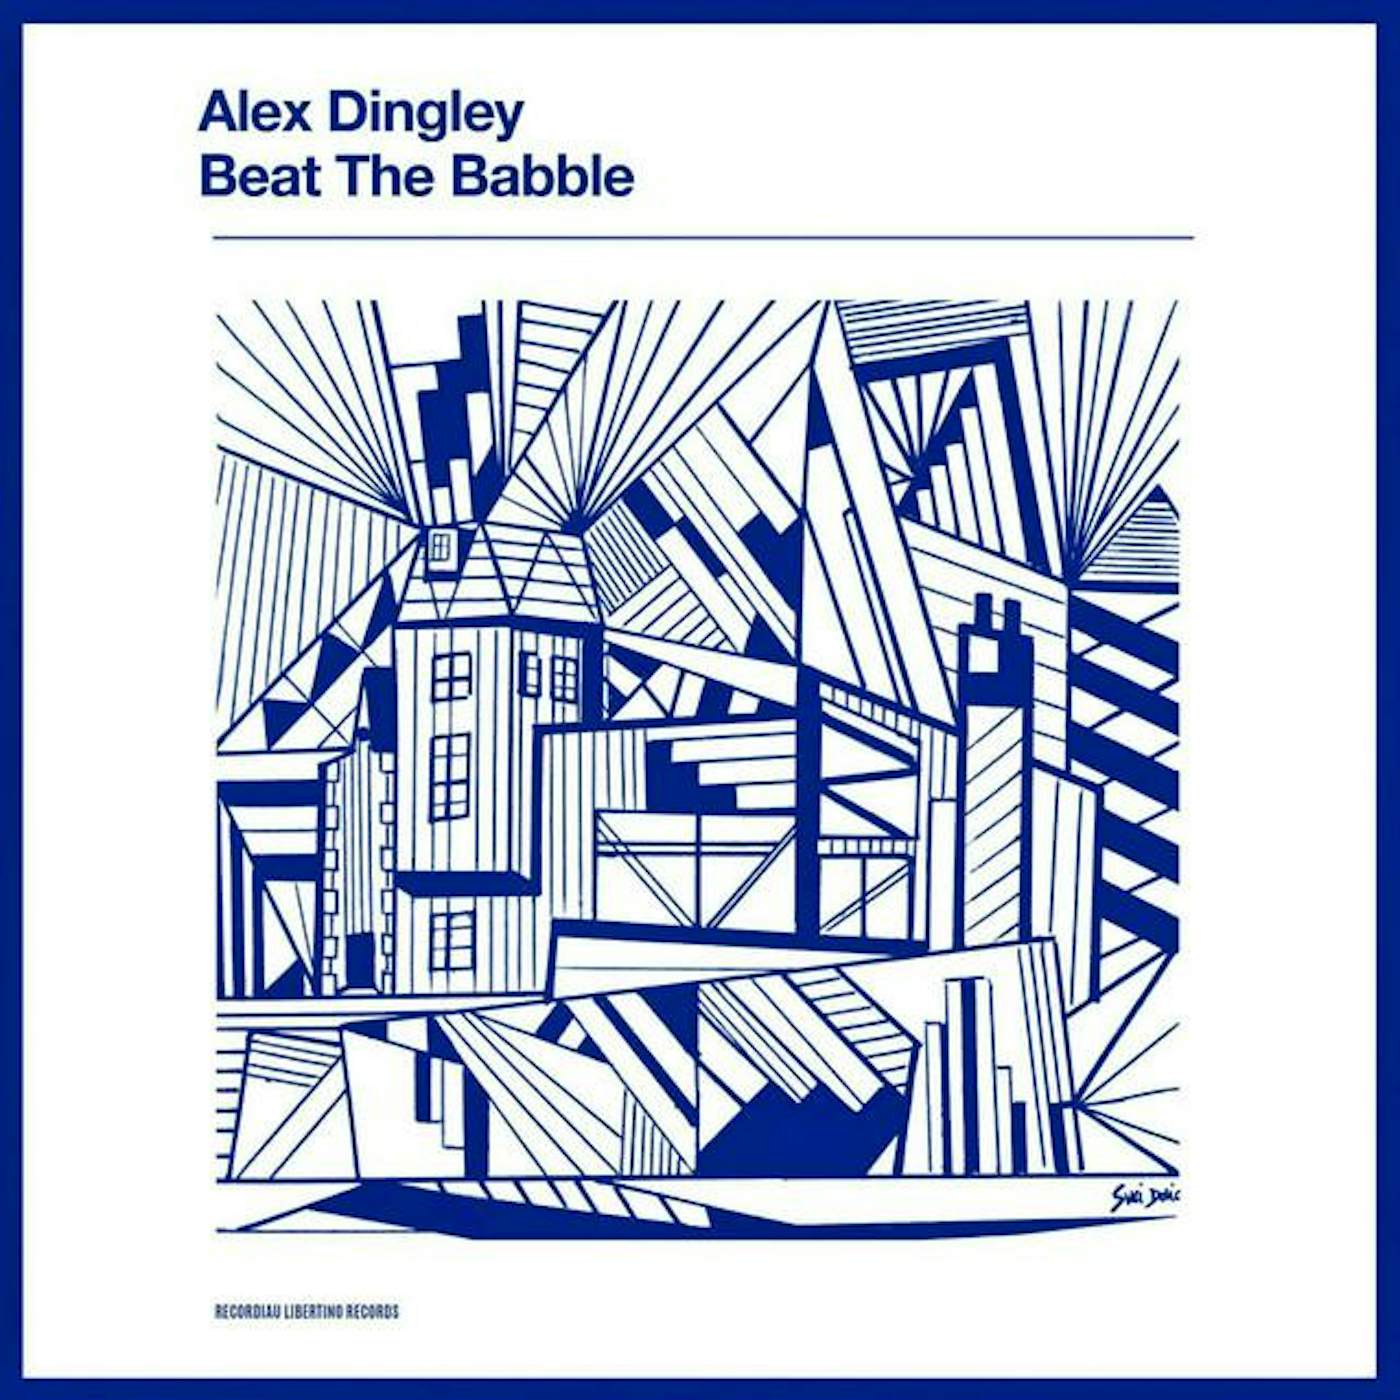 Alex Dingley